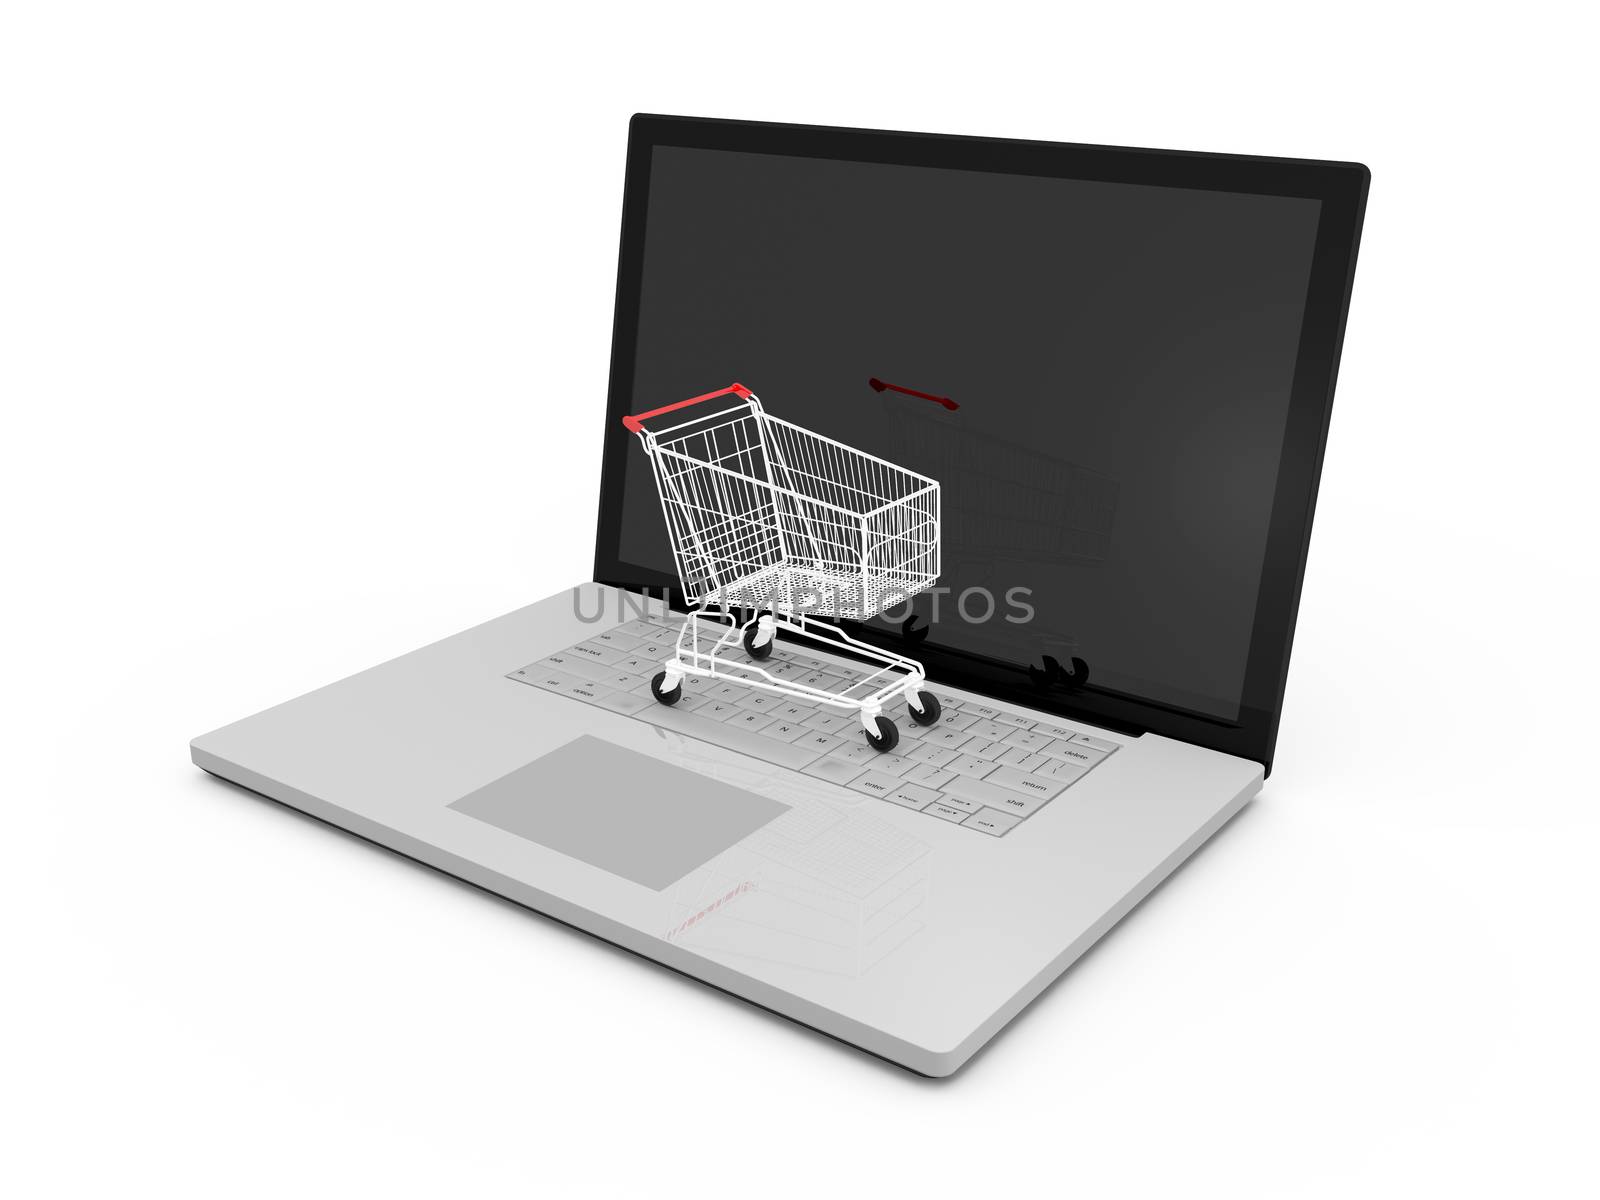 Laptop and Shopping Cart by niglaynike